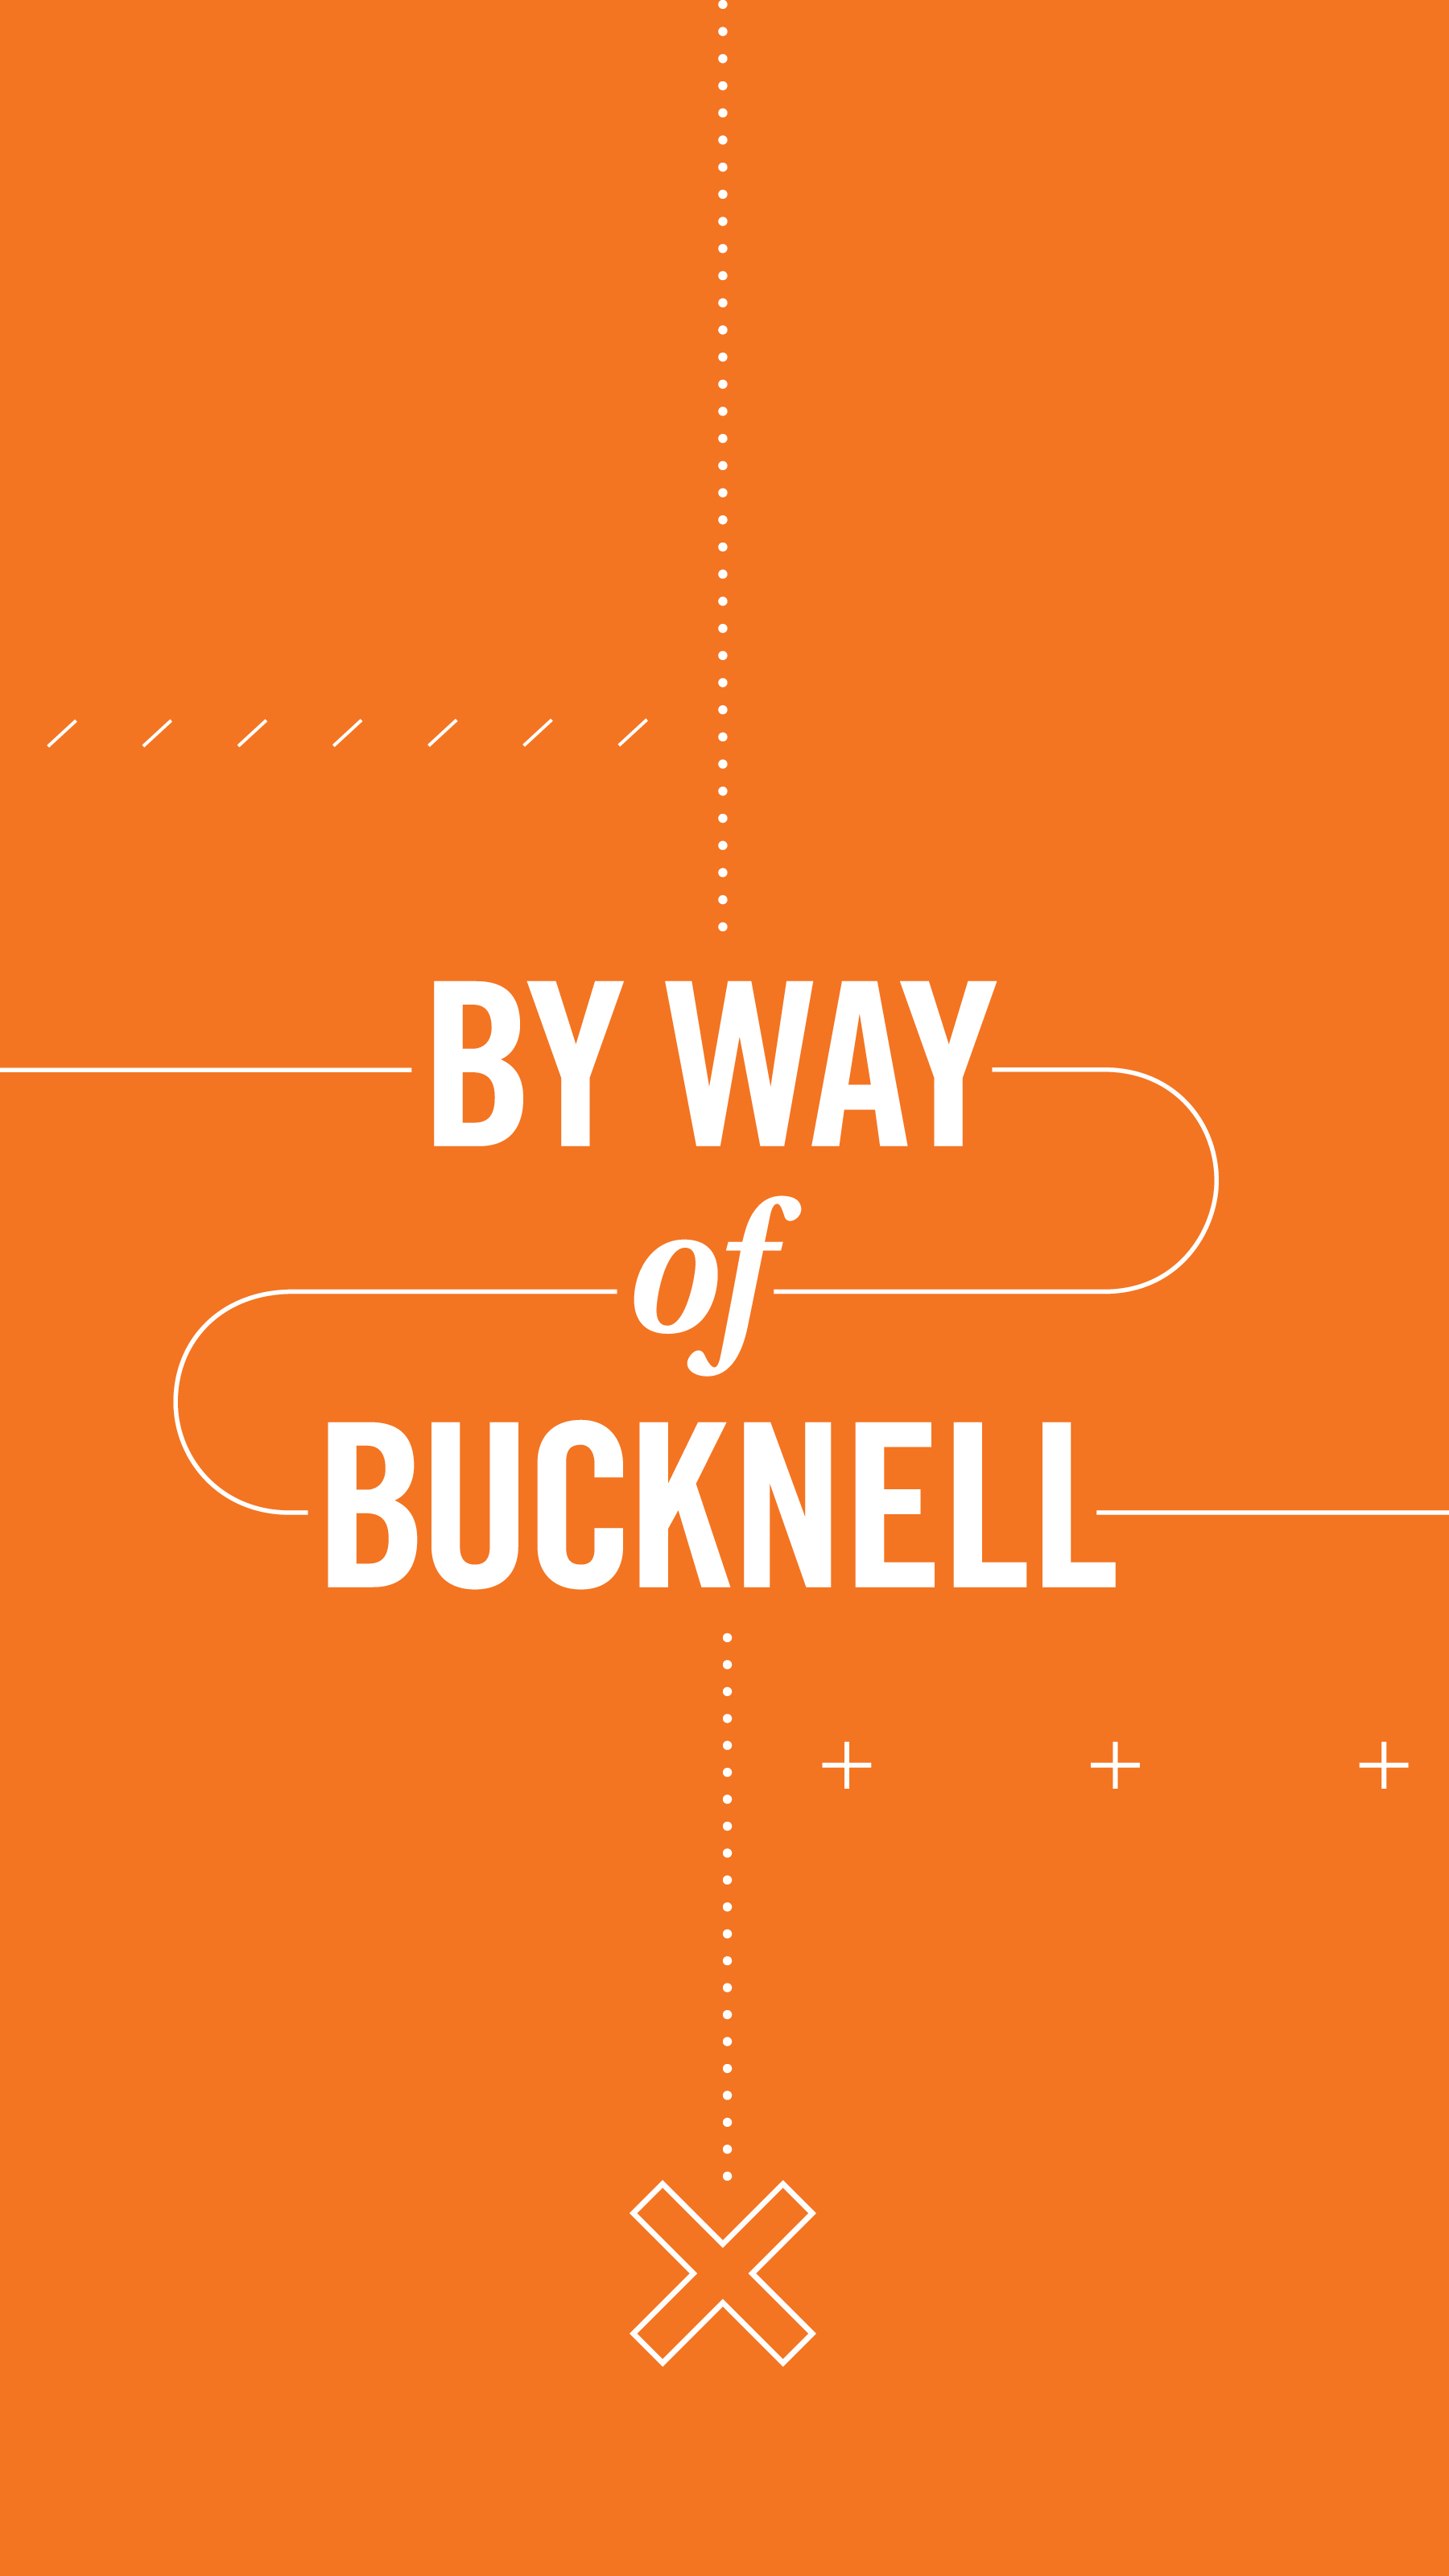 Bucknell Brand